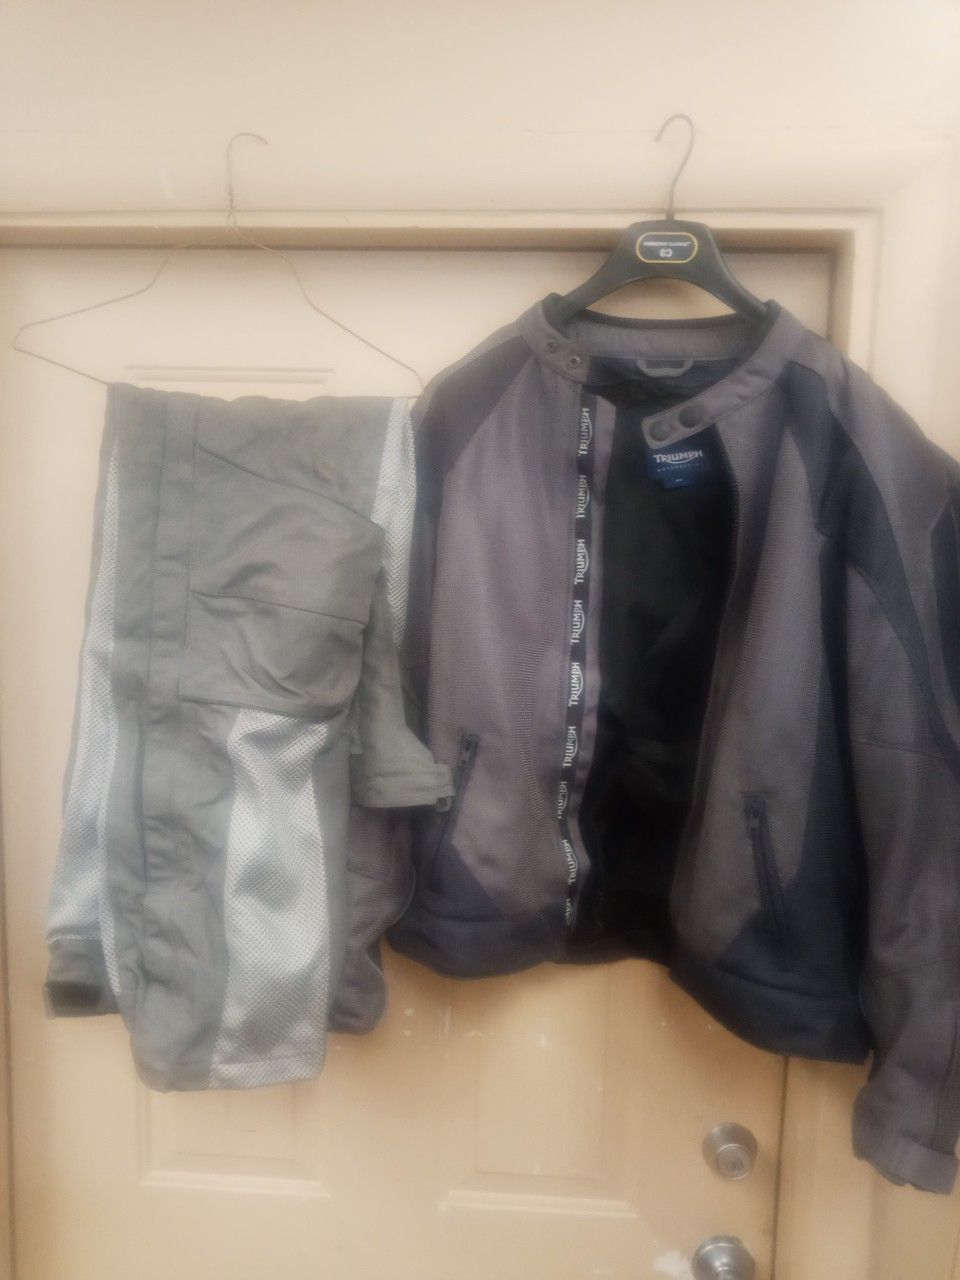 Triumph motorcycle jacket sz m and Joe rocket motorcycle pants size large